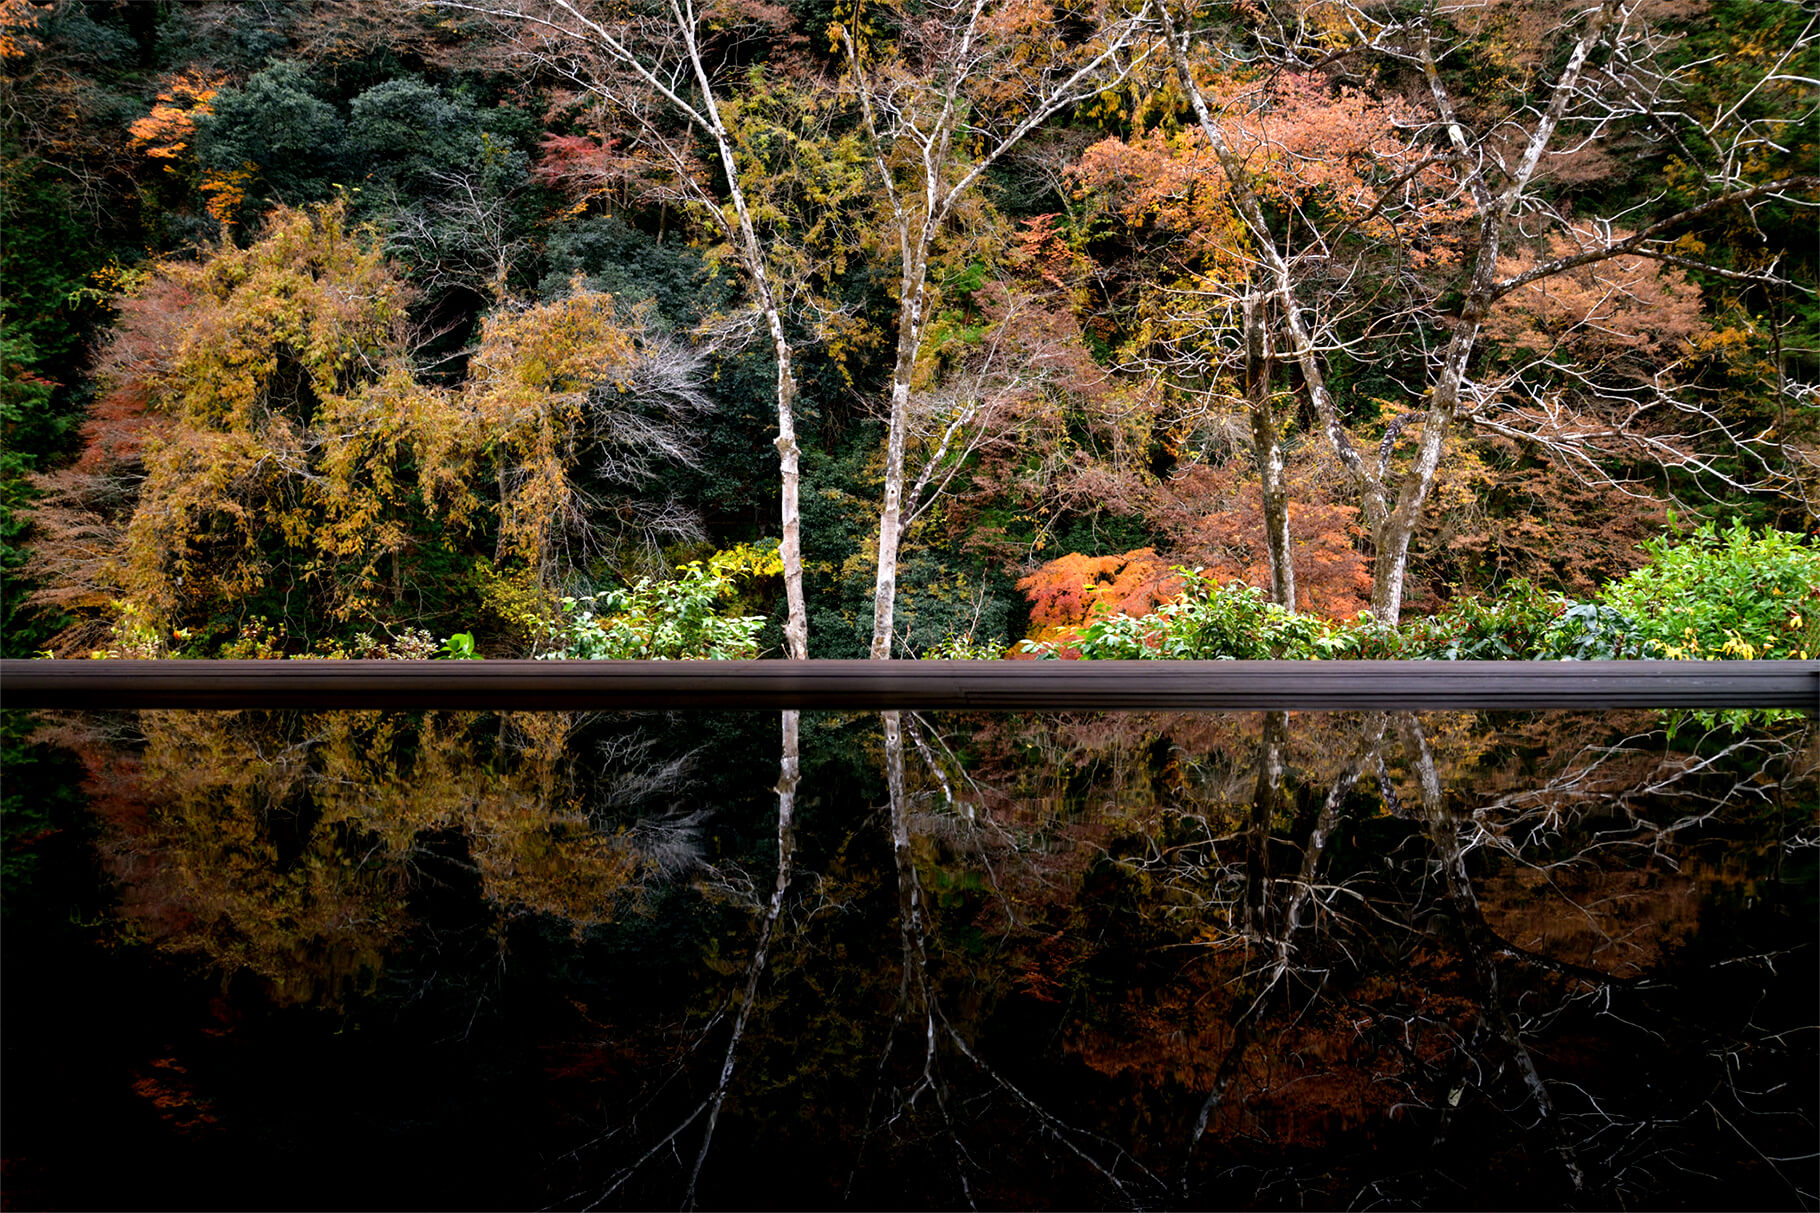 The autumn foliage scenery from Fushi's Outdoor Livingng